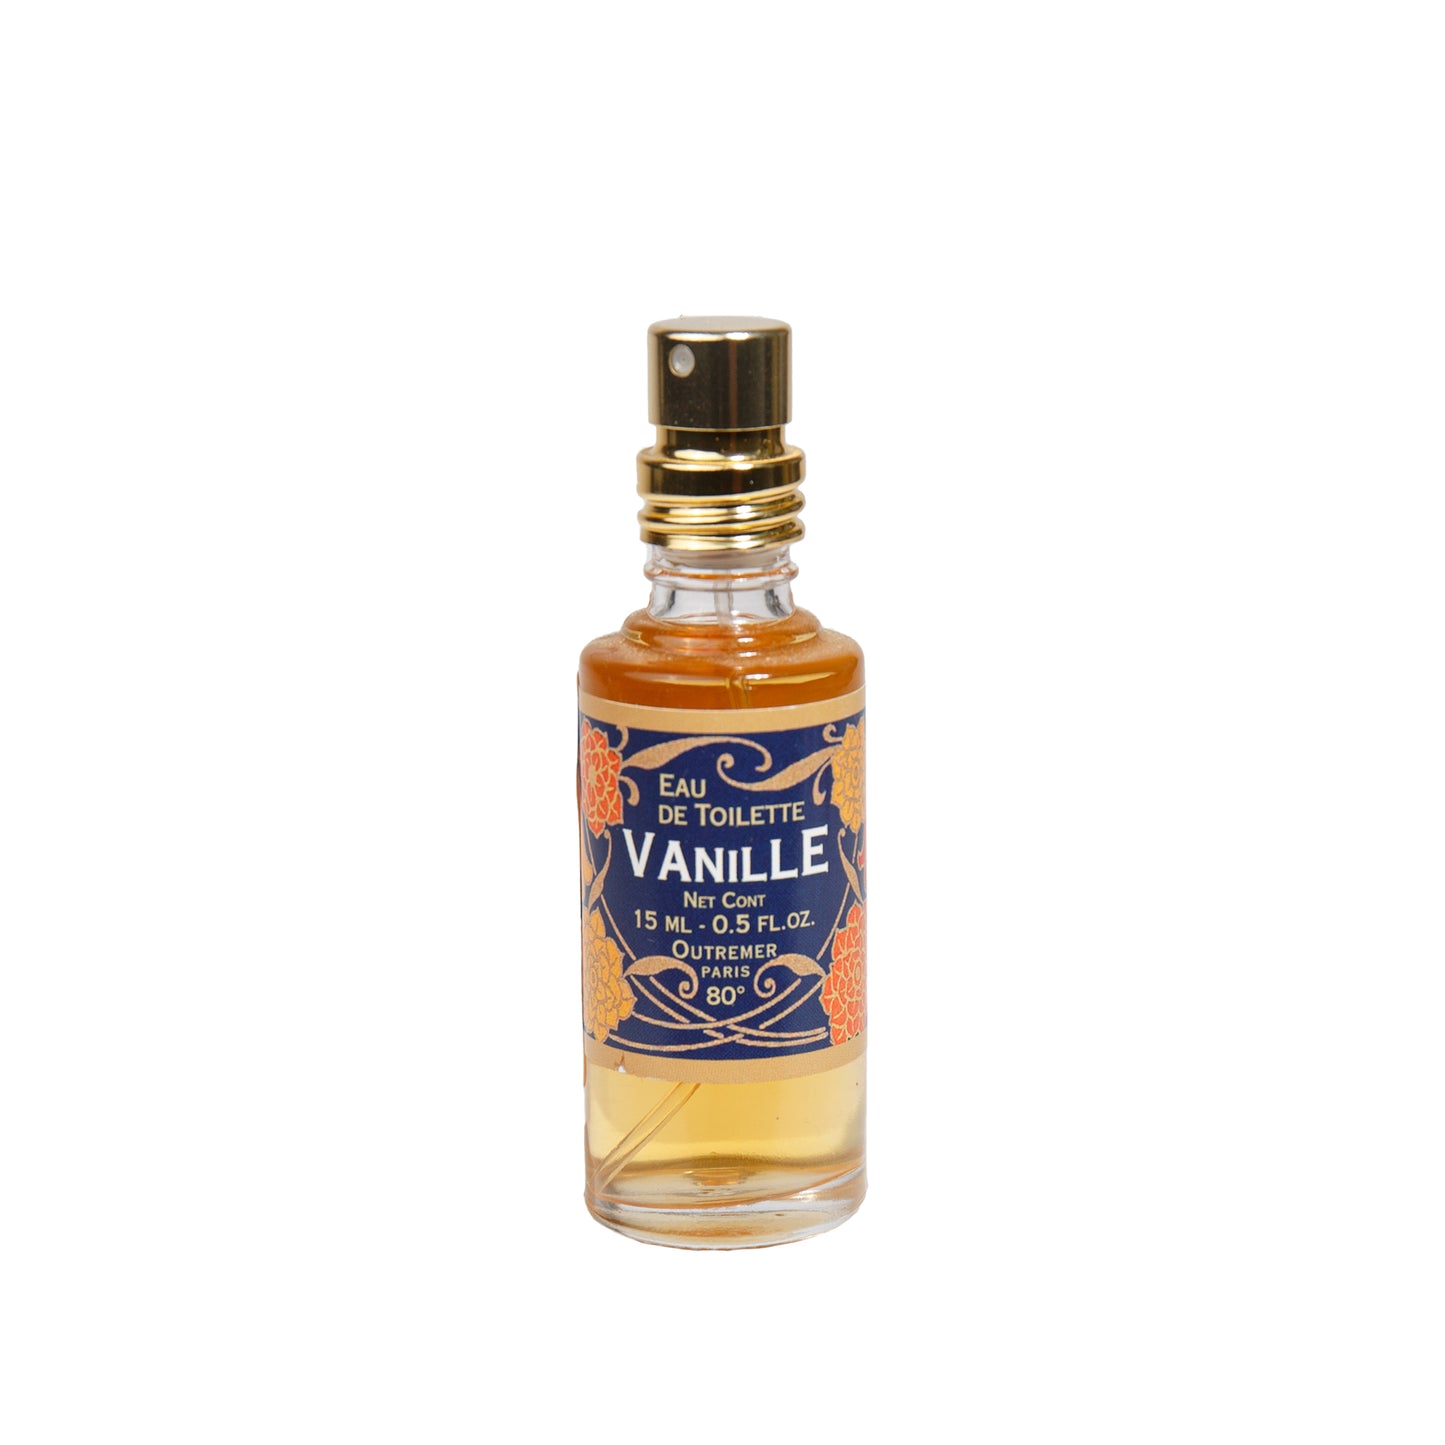 Primary Image of Mini Vanille (Classic Label) EDT 